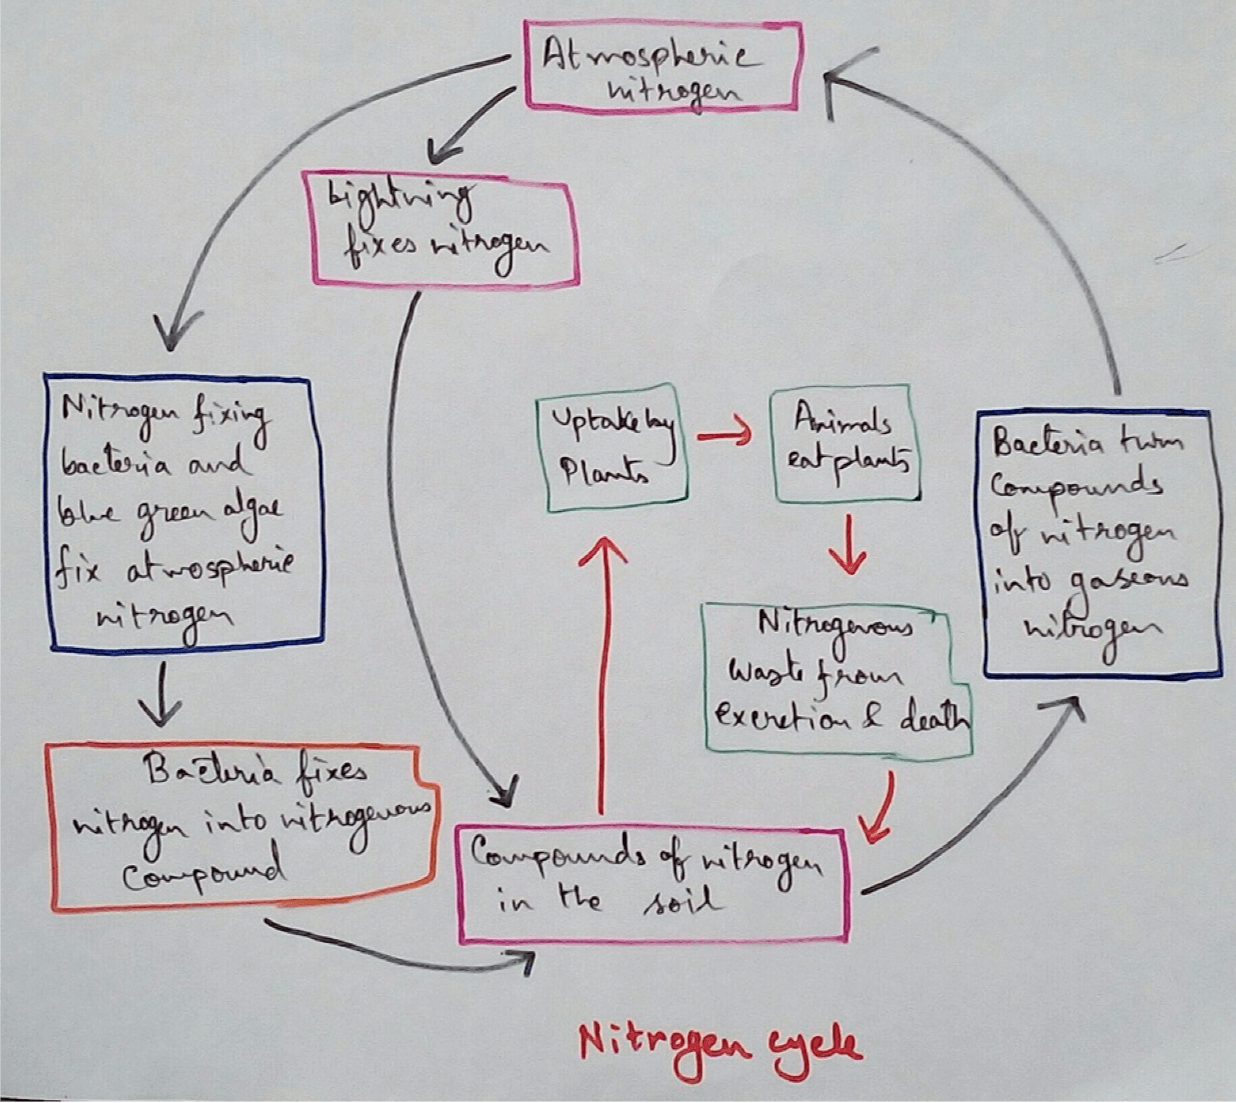 Nitrogen Cycle